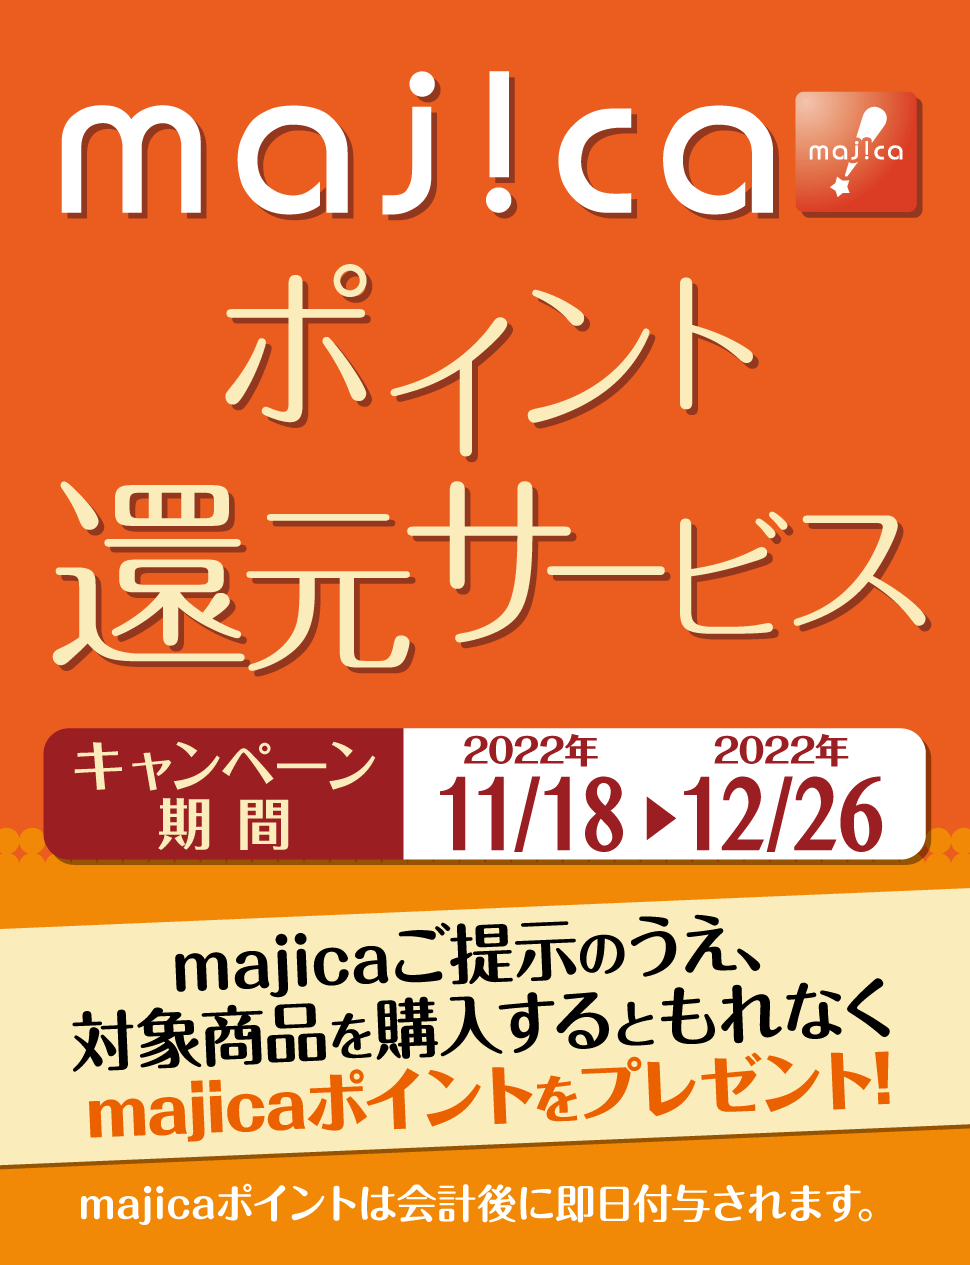 majicaポイント還元サービス「ブランド品キャンぺーン」